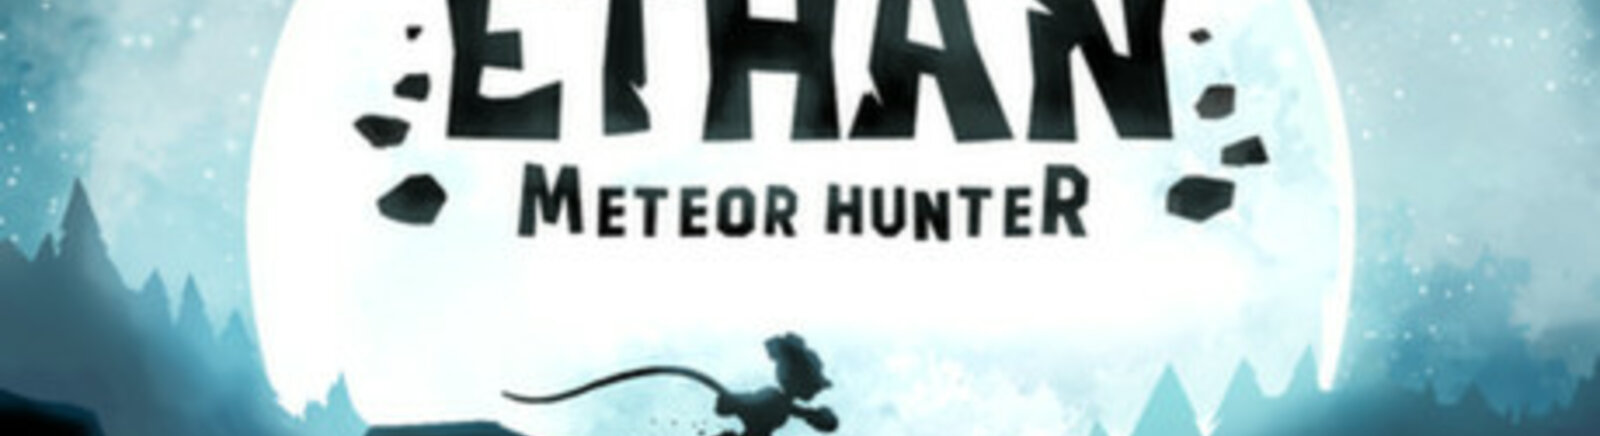 Дата выхода Ethan: Meteor Hunter  на PC, Xbox One и PS3 в России и во всем мире